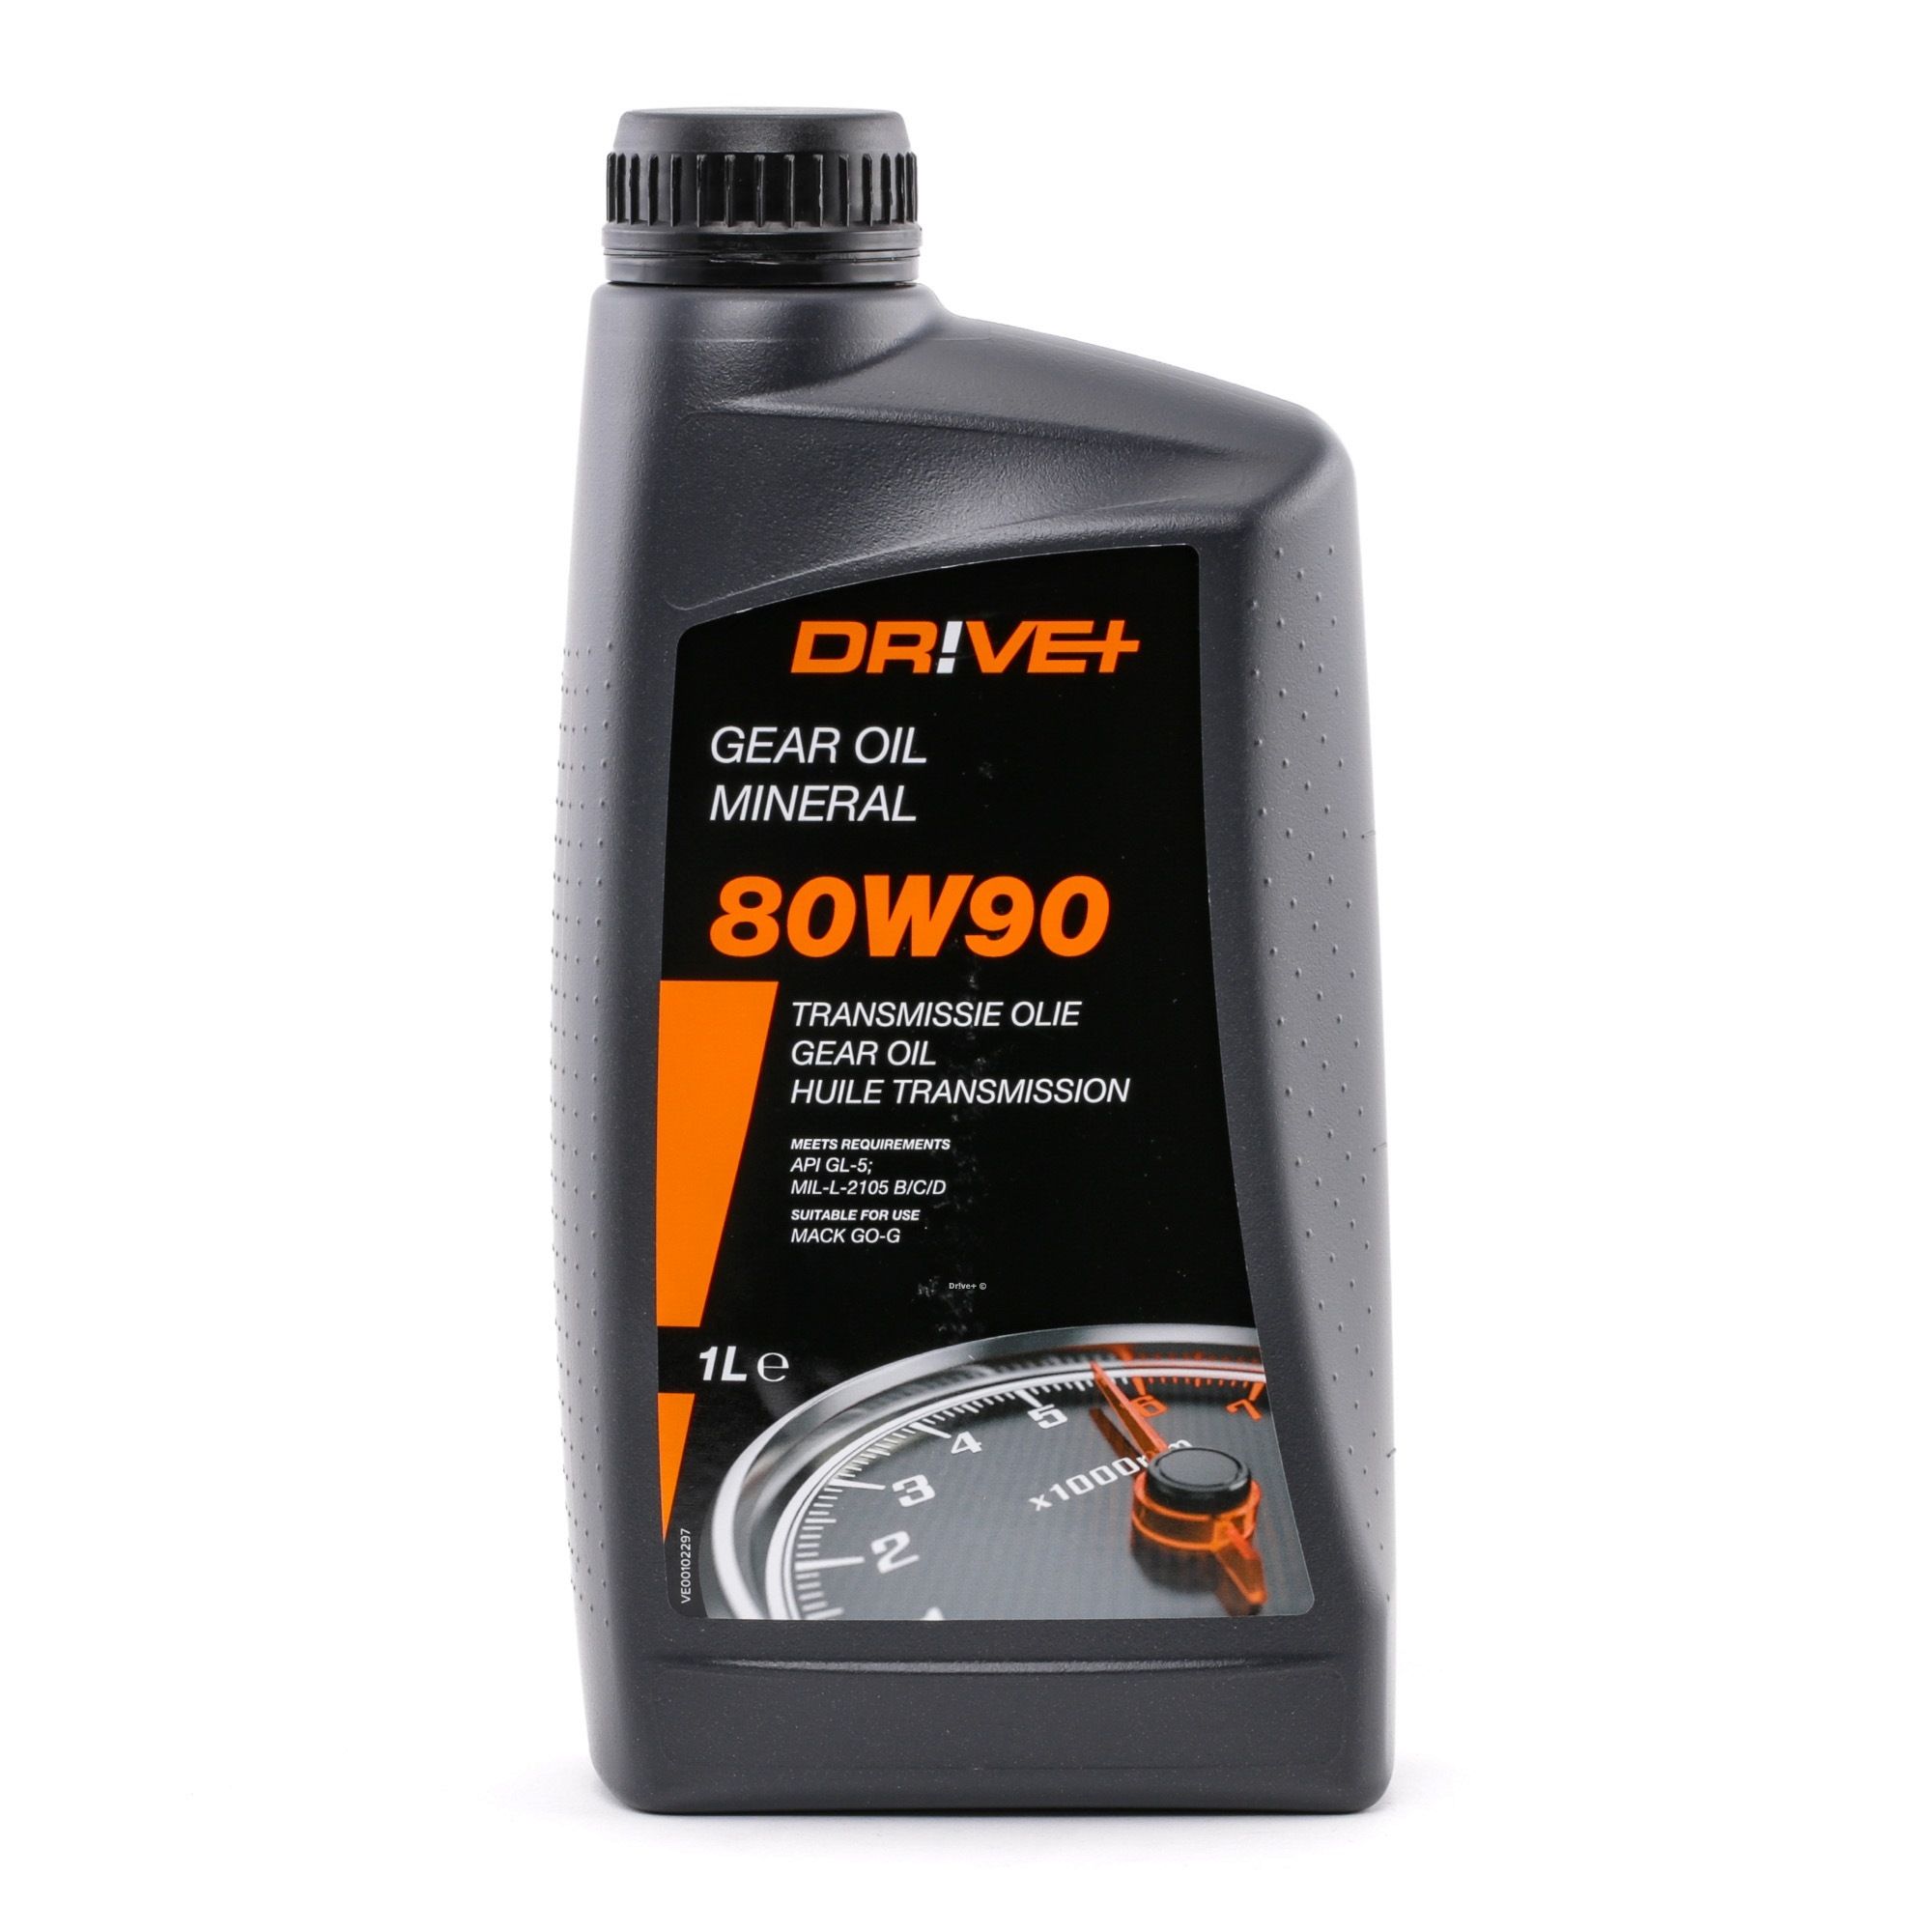 Original DP3310.10.070 Dr!ve+ Gear oil VW